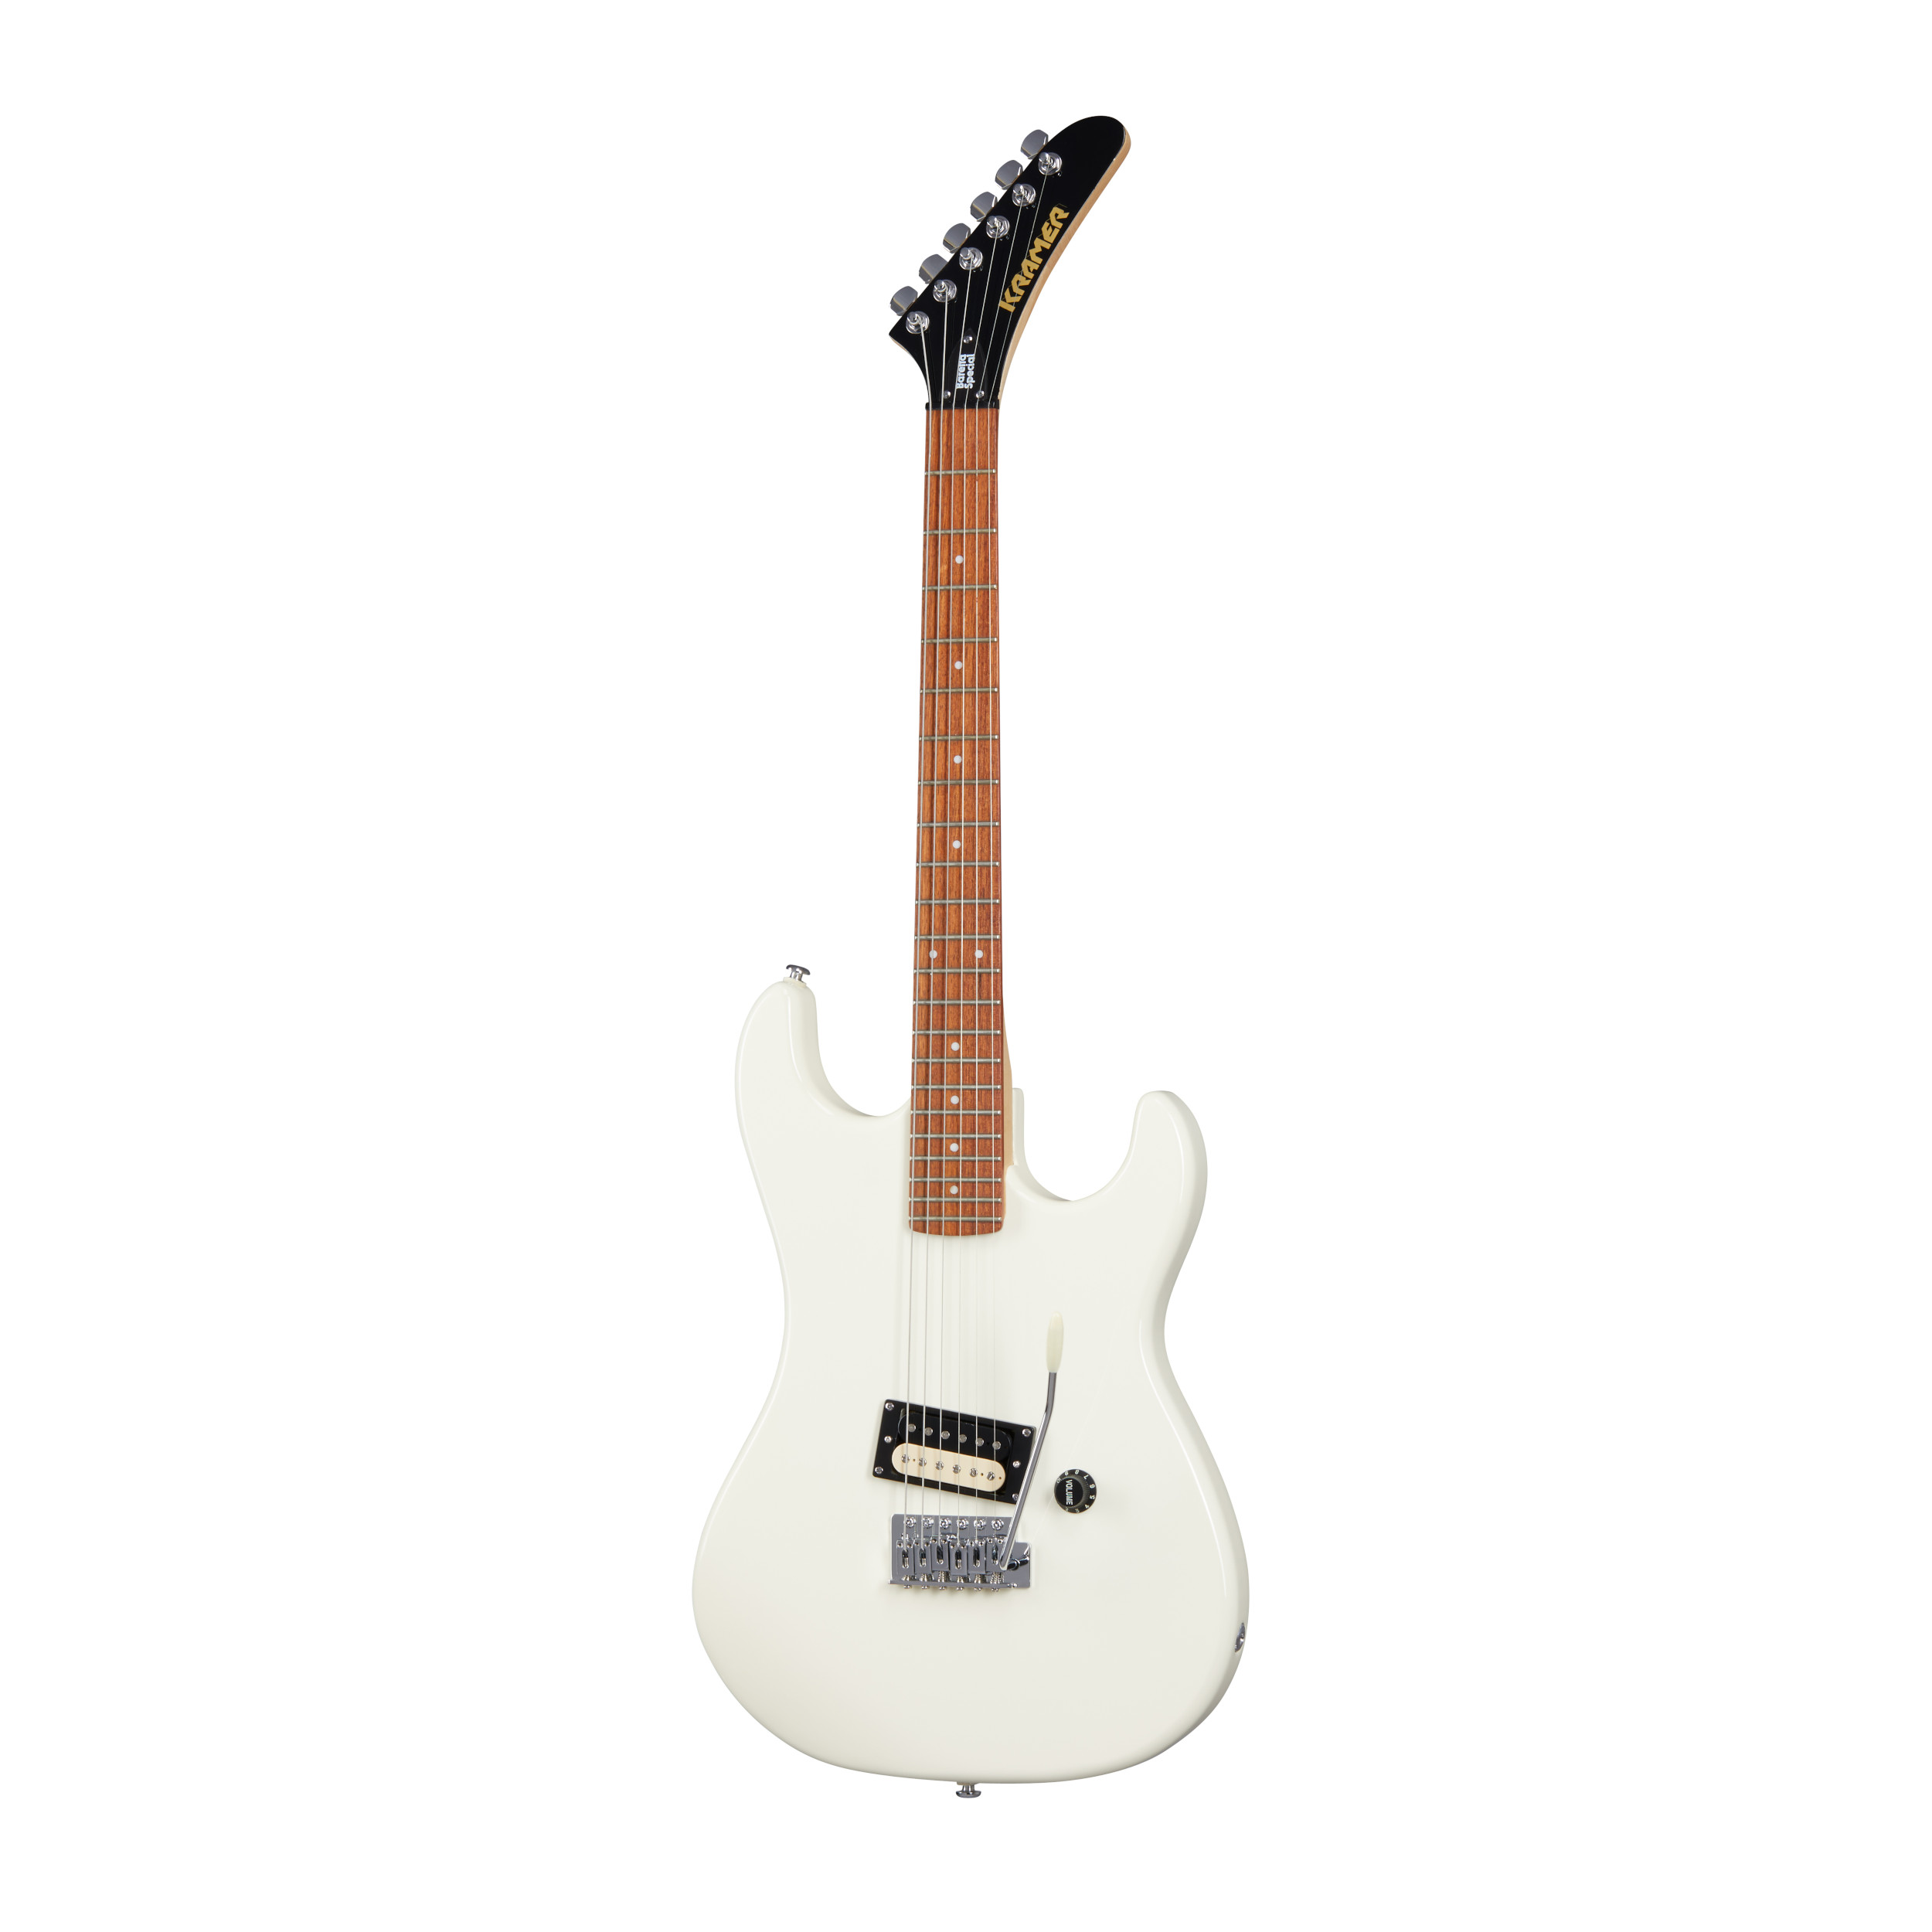 Kramer Baretta Special (Chrome Hardware) Electric Guitar - Vintage White